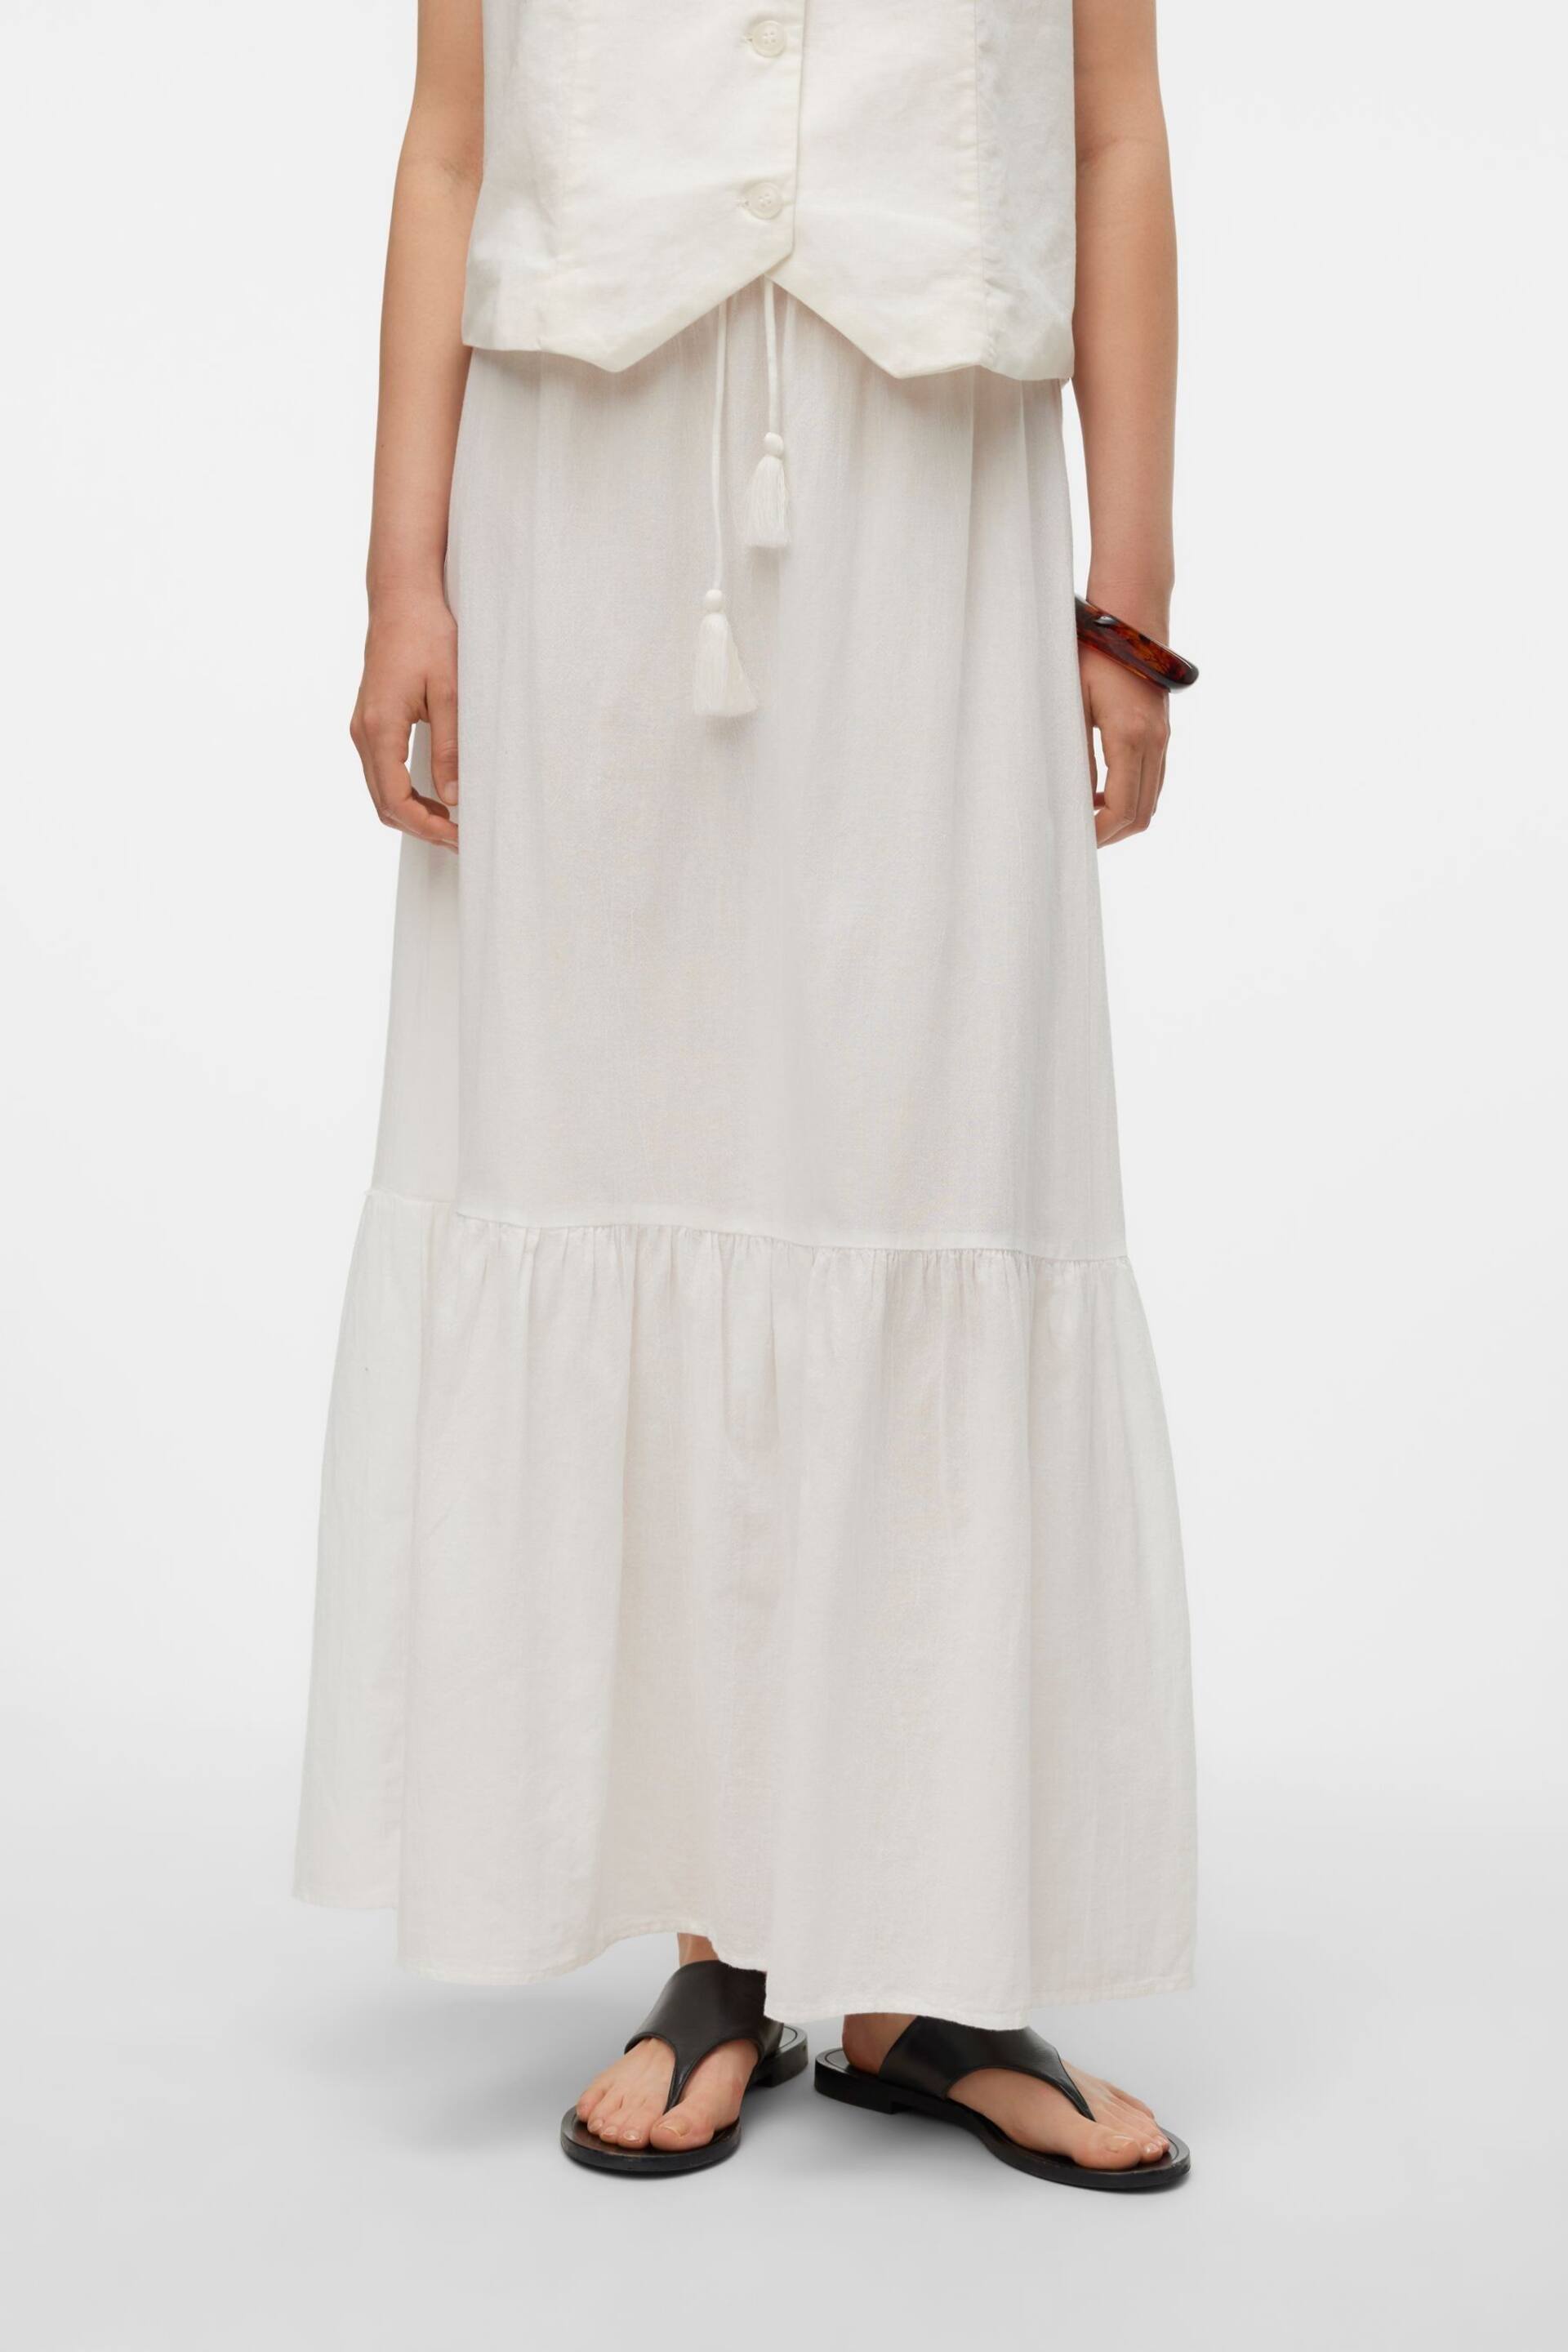 VERO MODA White Tiered Summer Maxi Skirt - Image 1 of 1